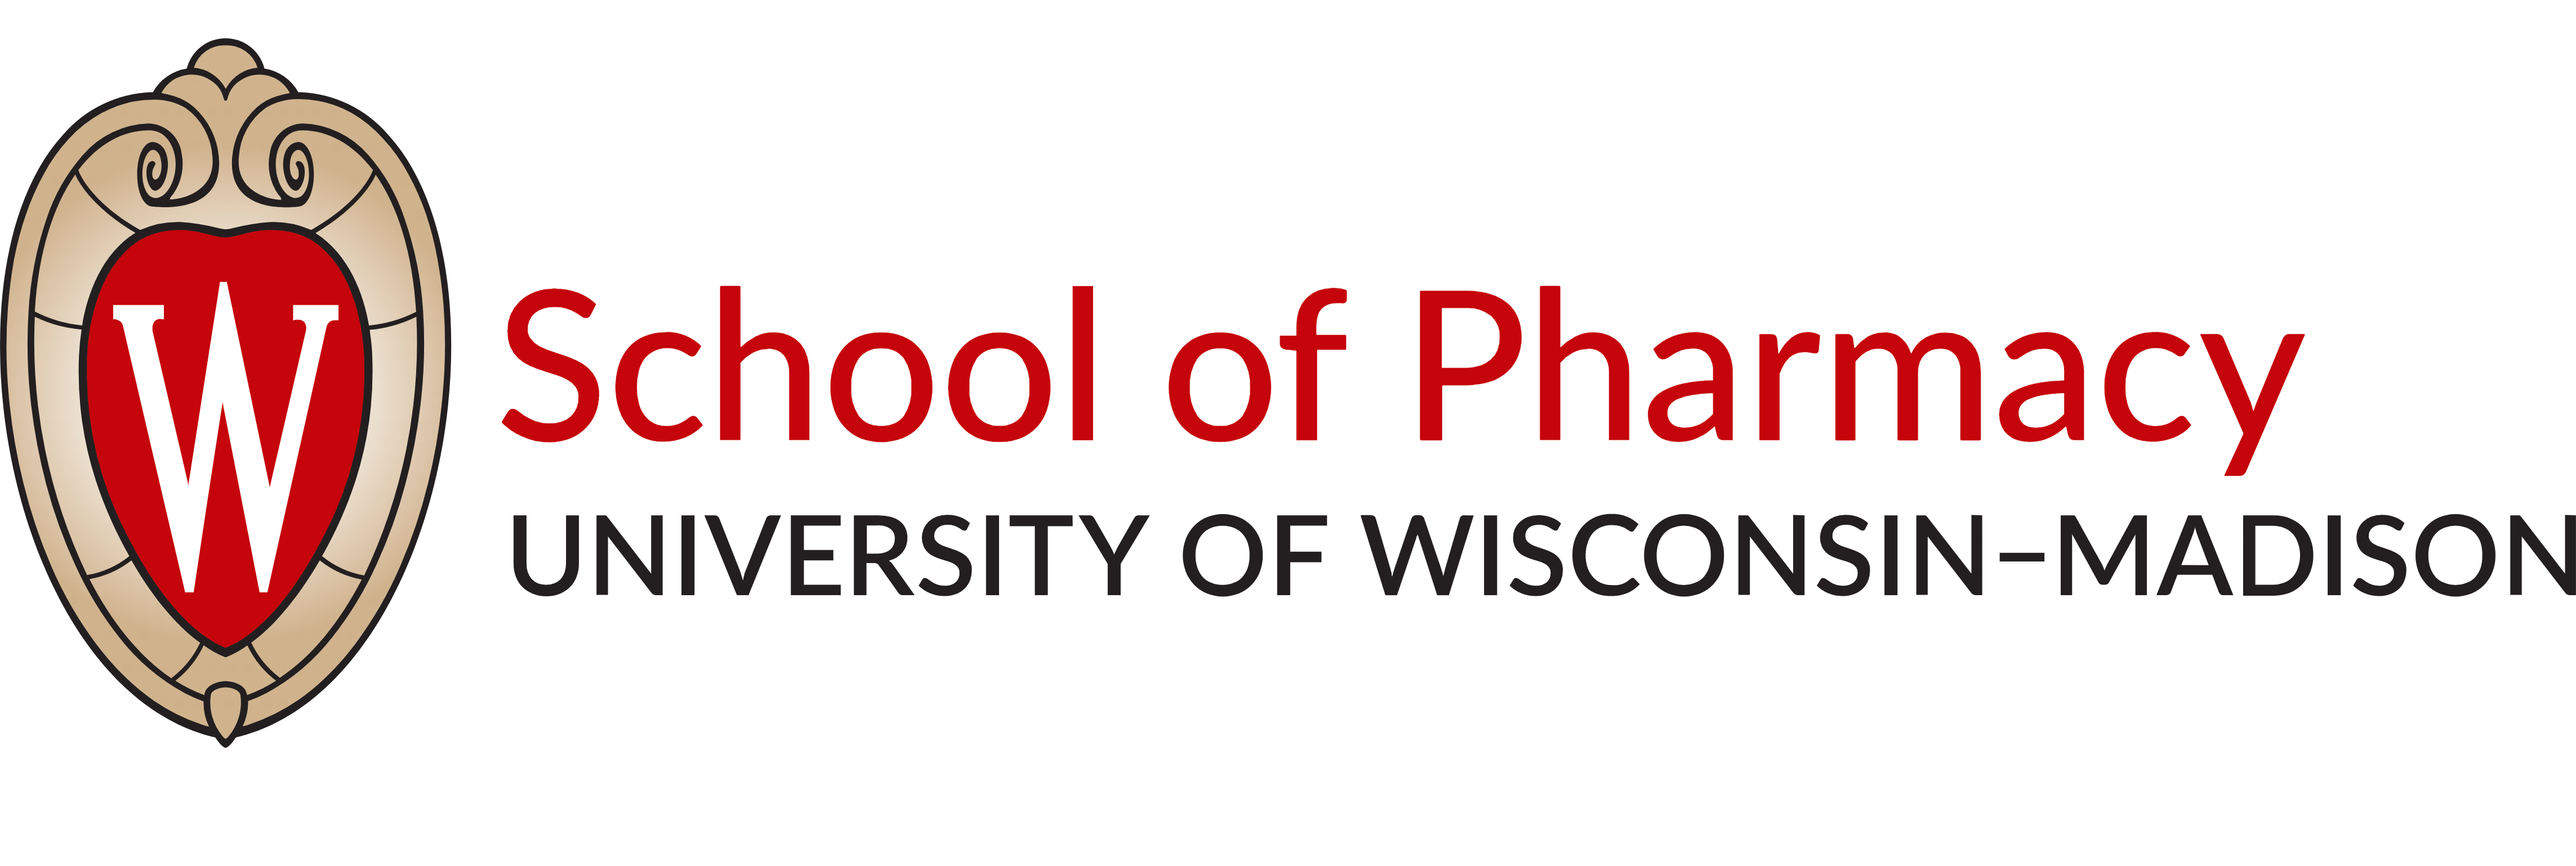 University of Madison-Wisconsin, School of Pharmacy